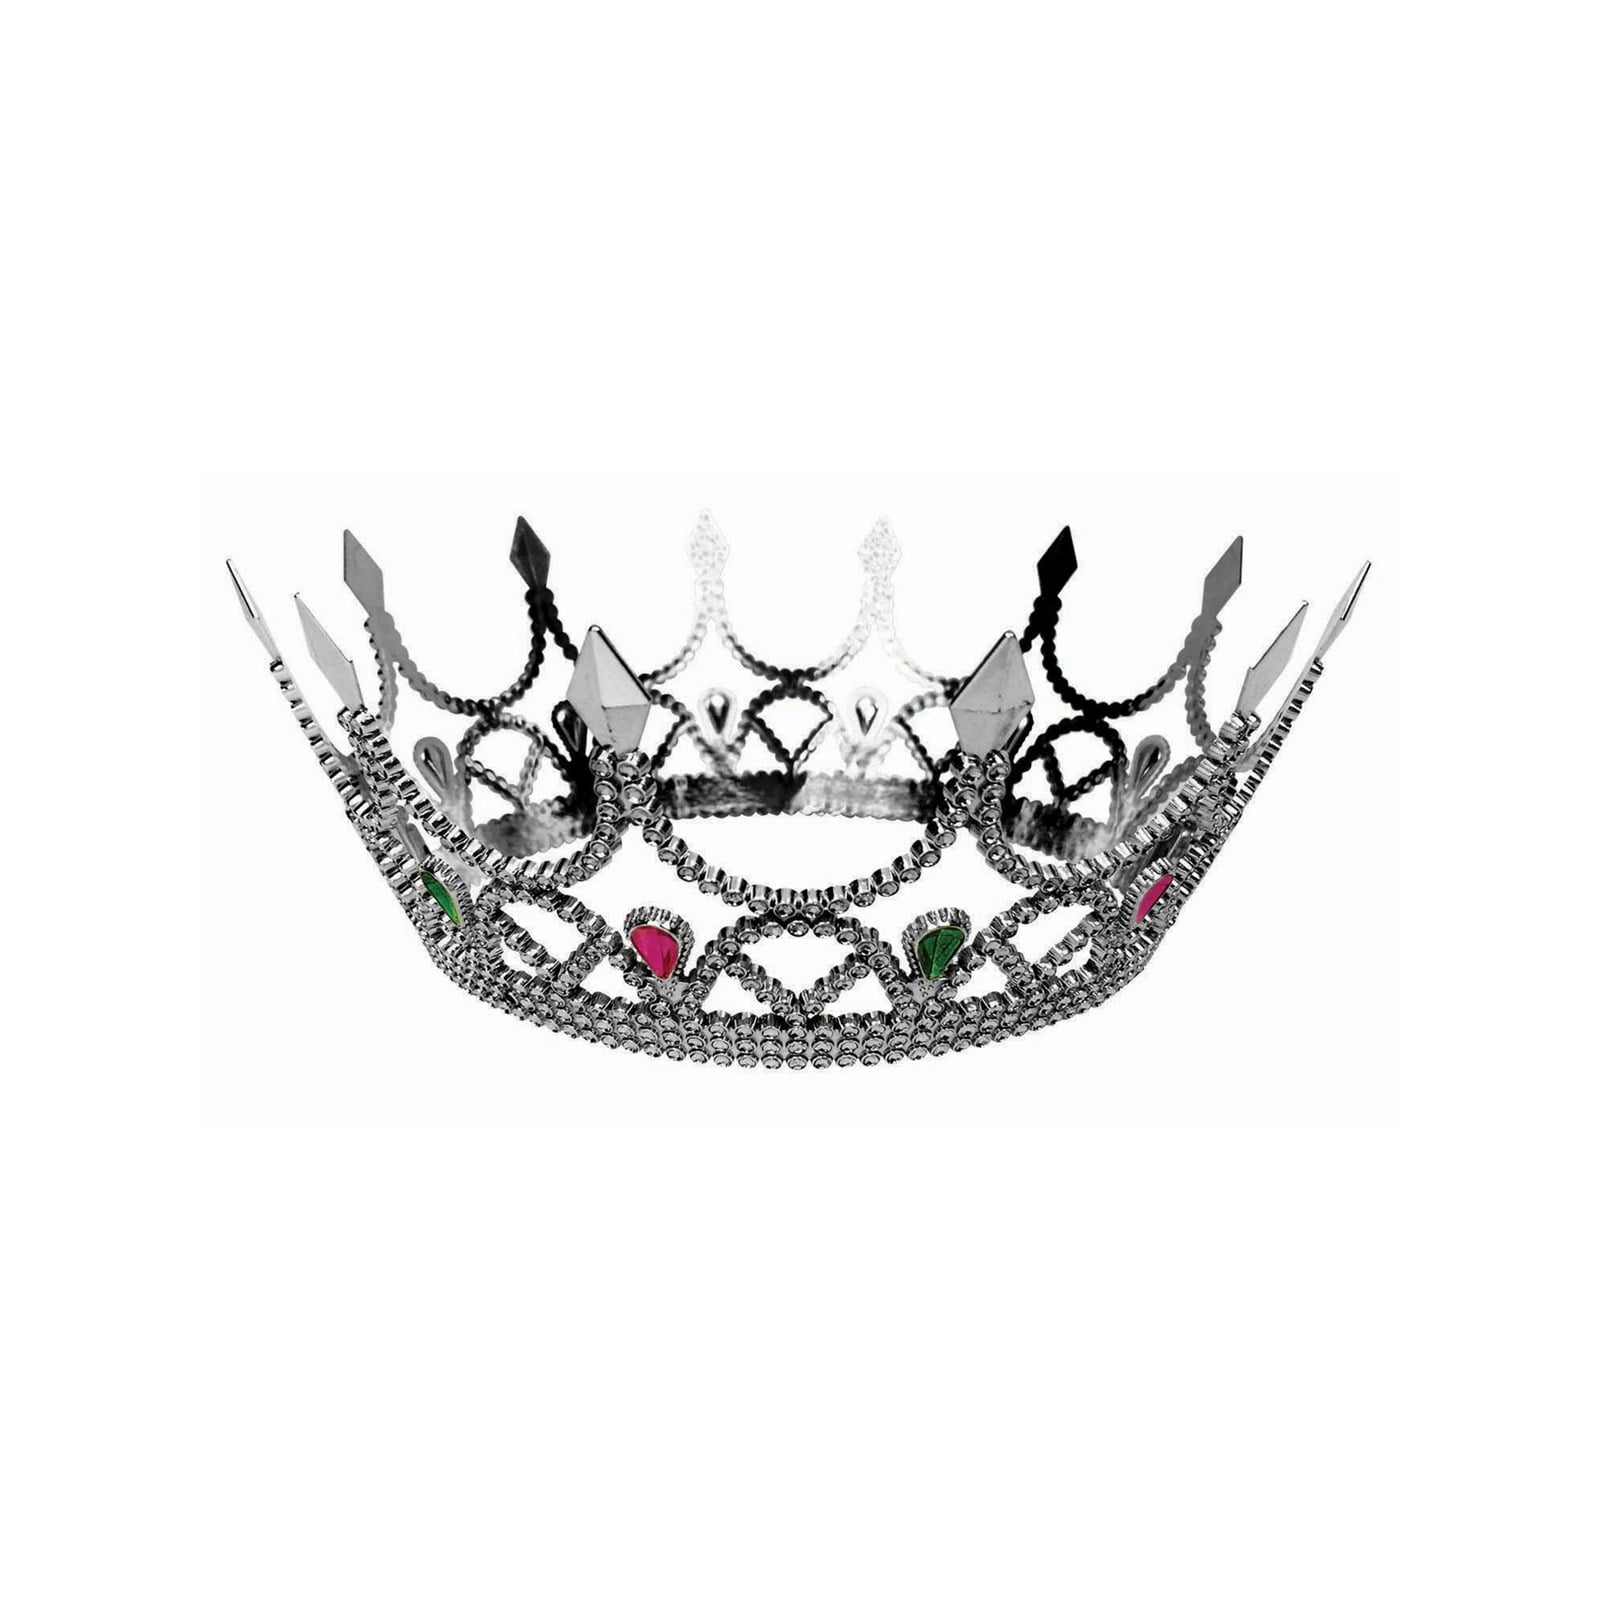 Crown Crown Art Prints Tiara King Queen Queen Crowns Princess Royal Crown 